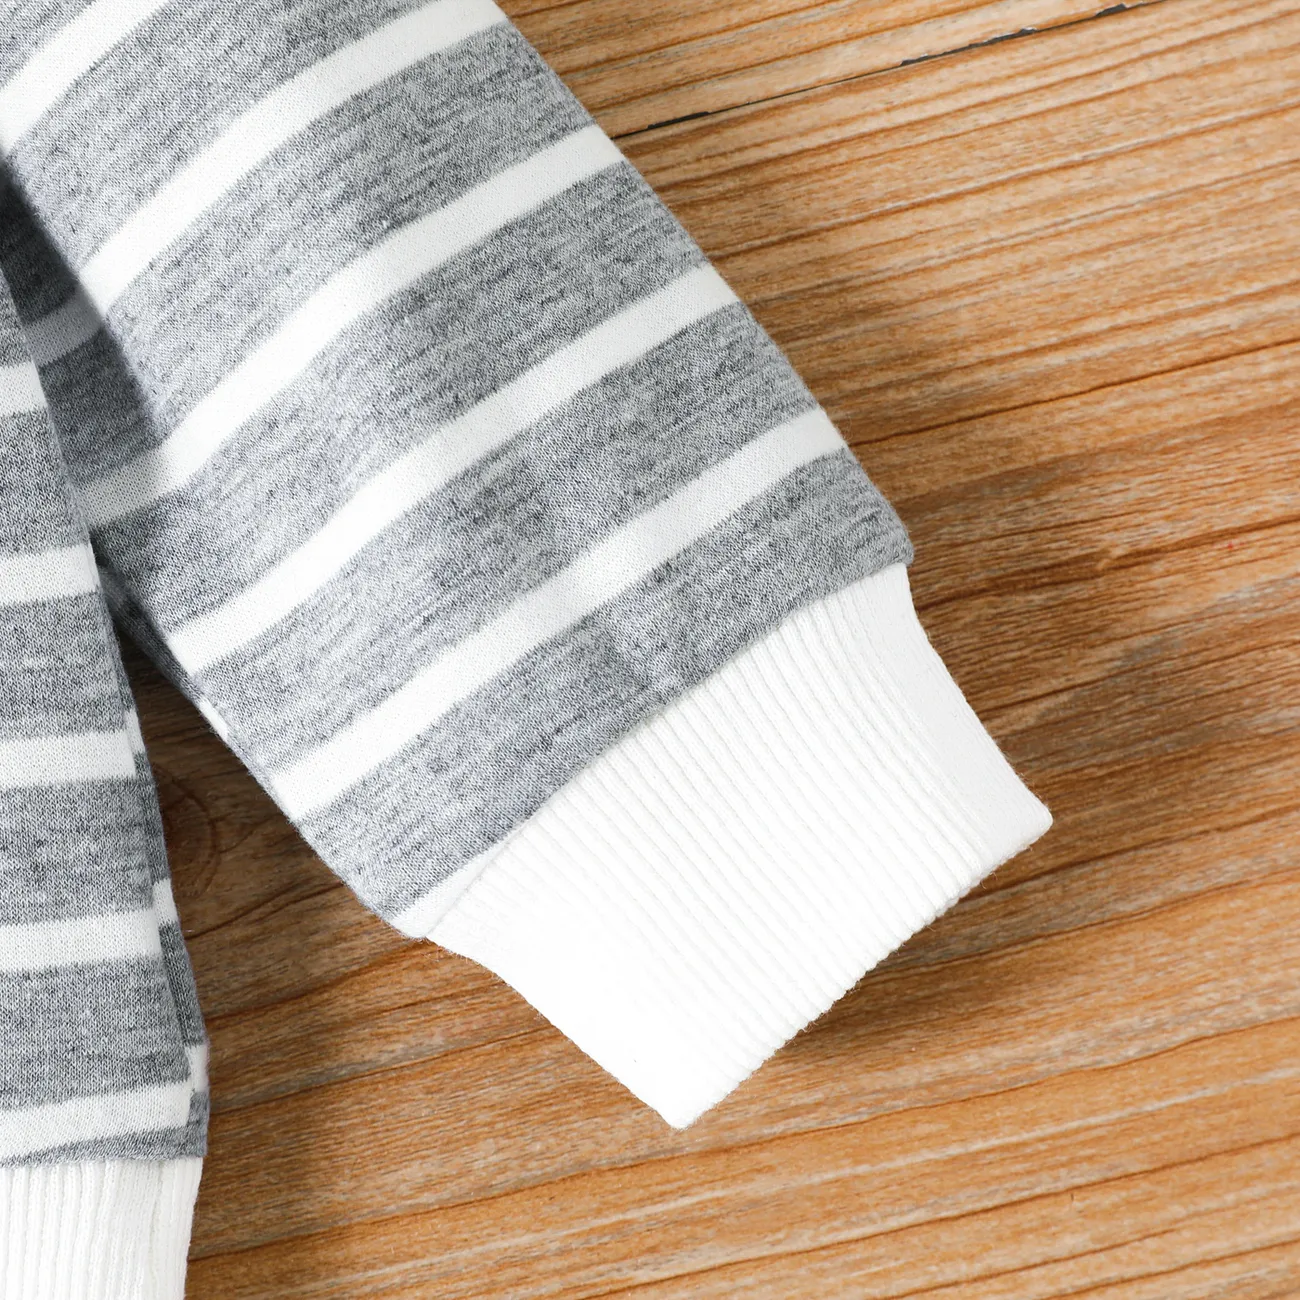 Baby Boy/Girl Long-sleeve Striped Pullover Sweatshirt Light Grey big image 1